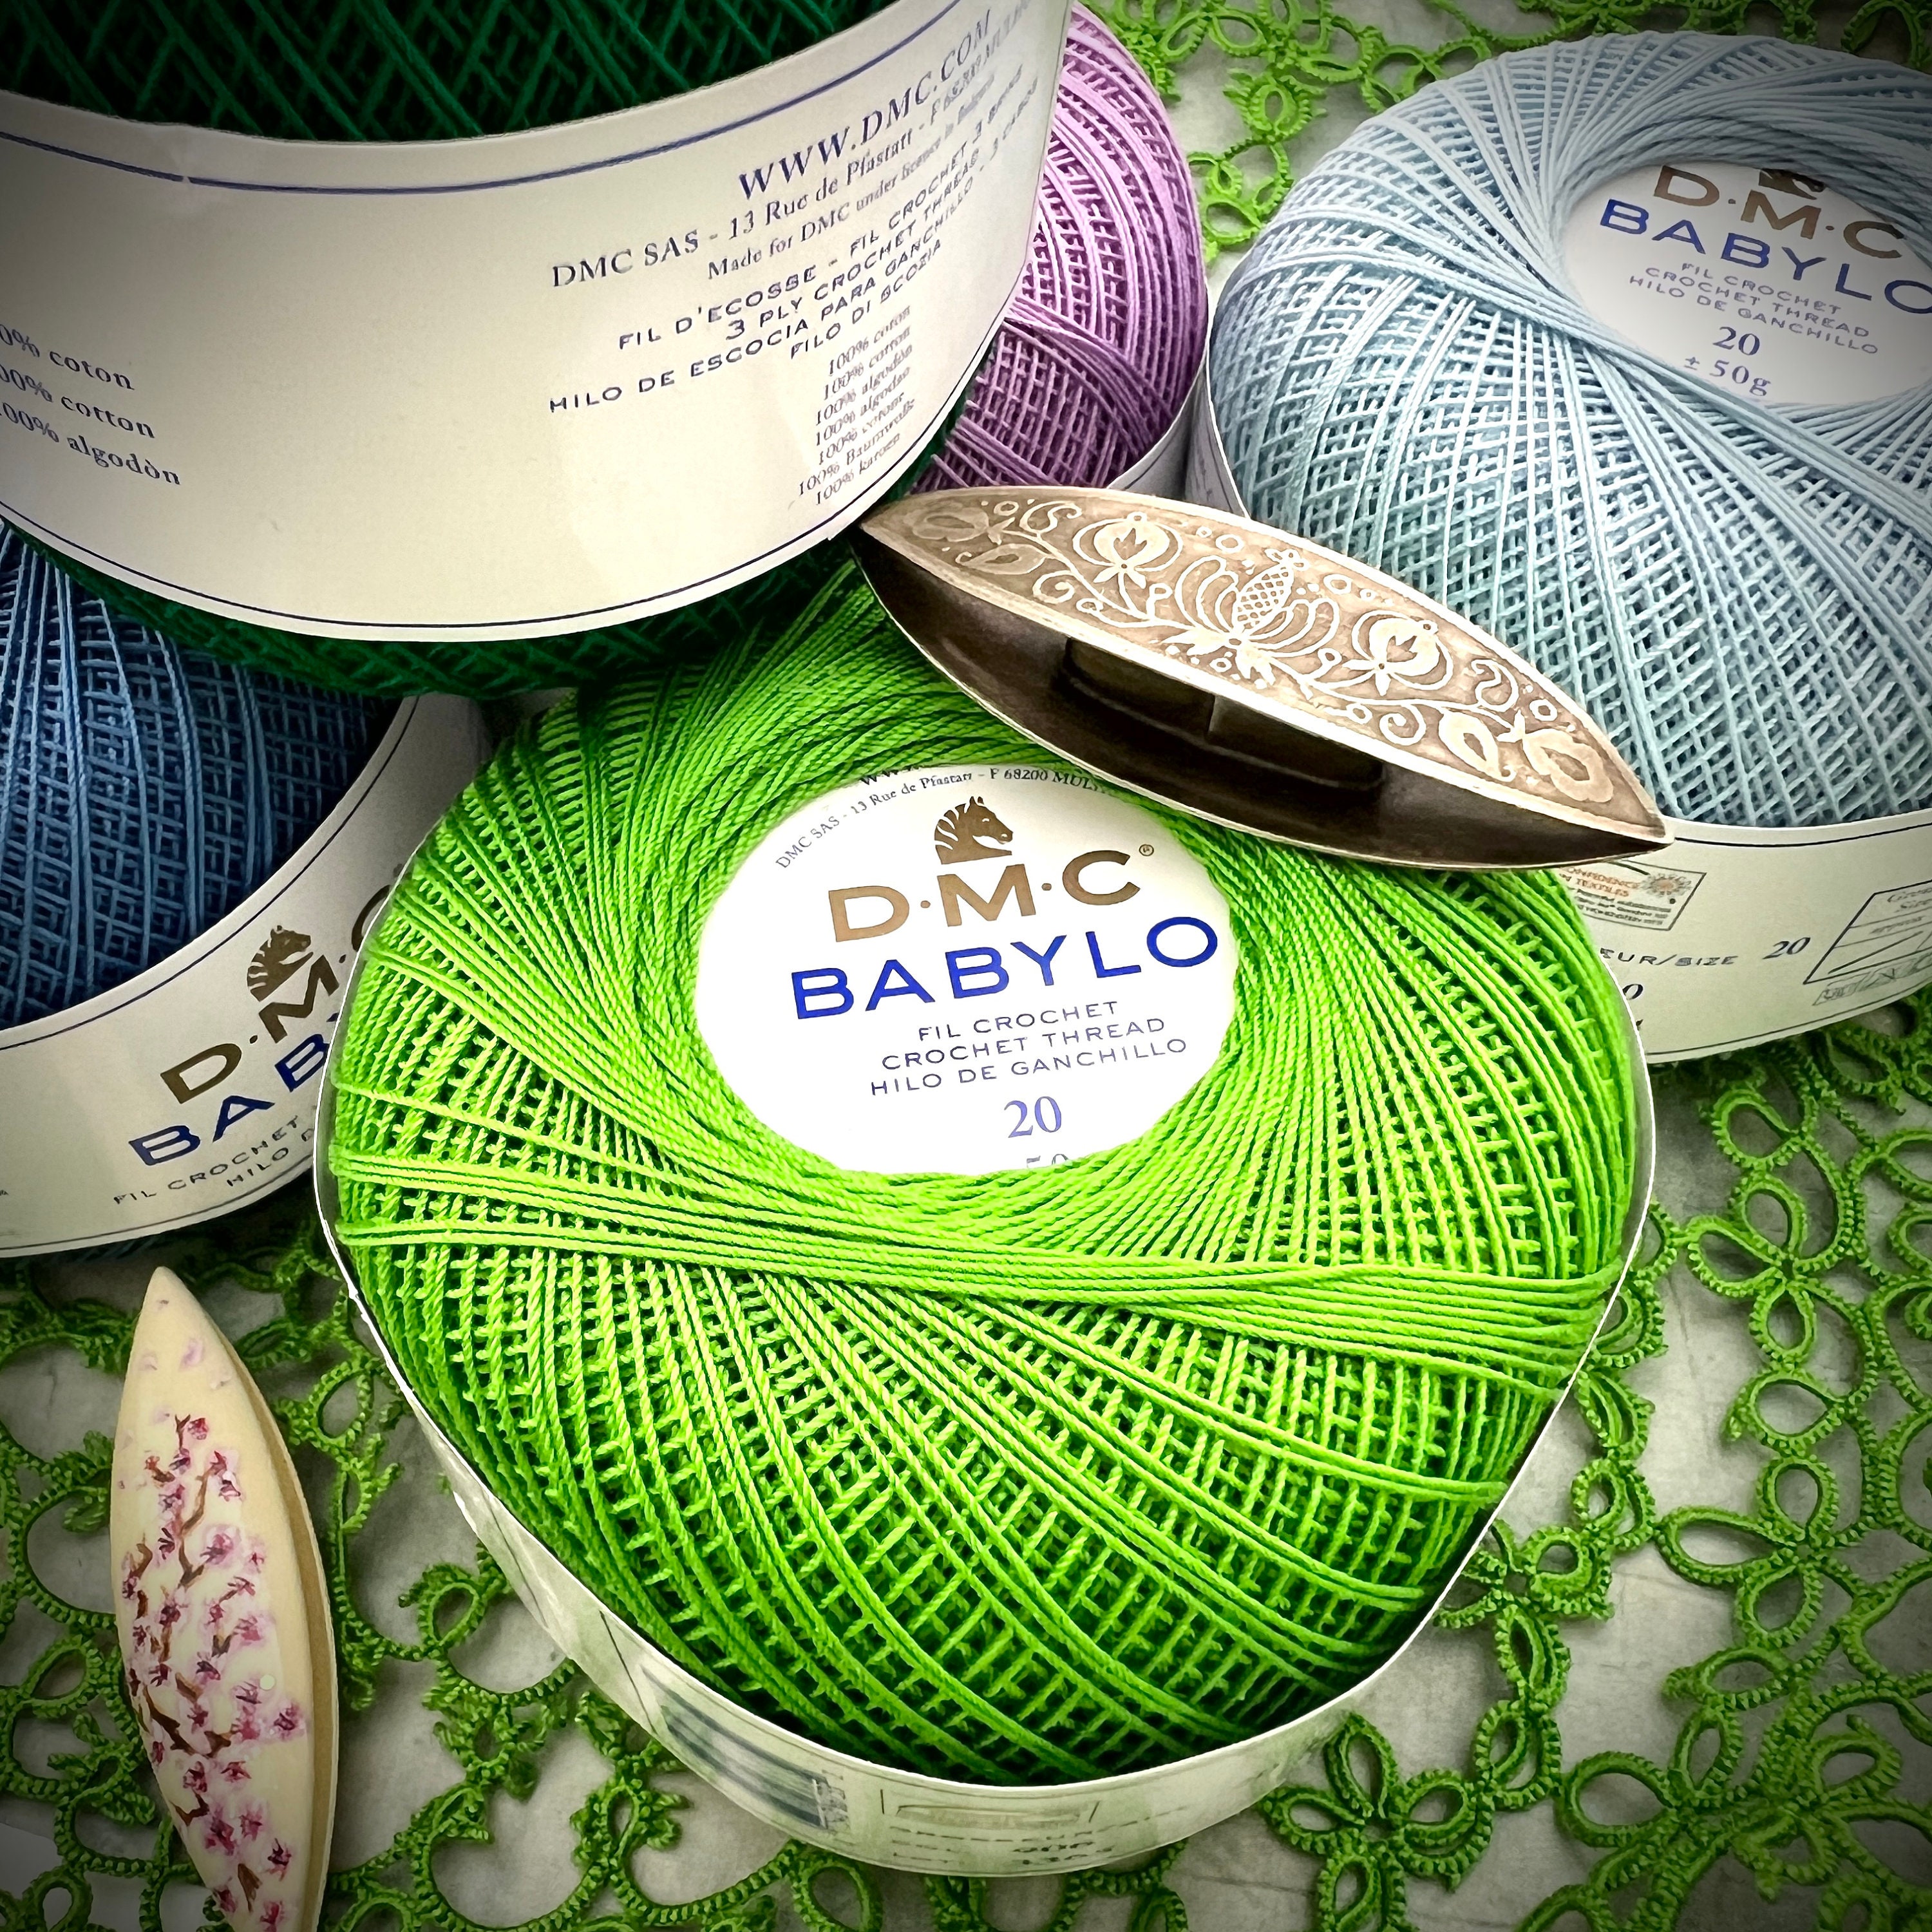 BULK Order 10 Crochet Cotton Thread Size 10, 50g X 225m, Lace 0, Mercerized  Cotton Yarn 10, YARNART LILY 